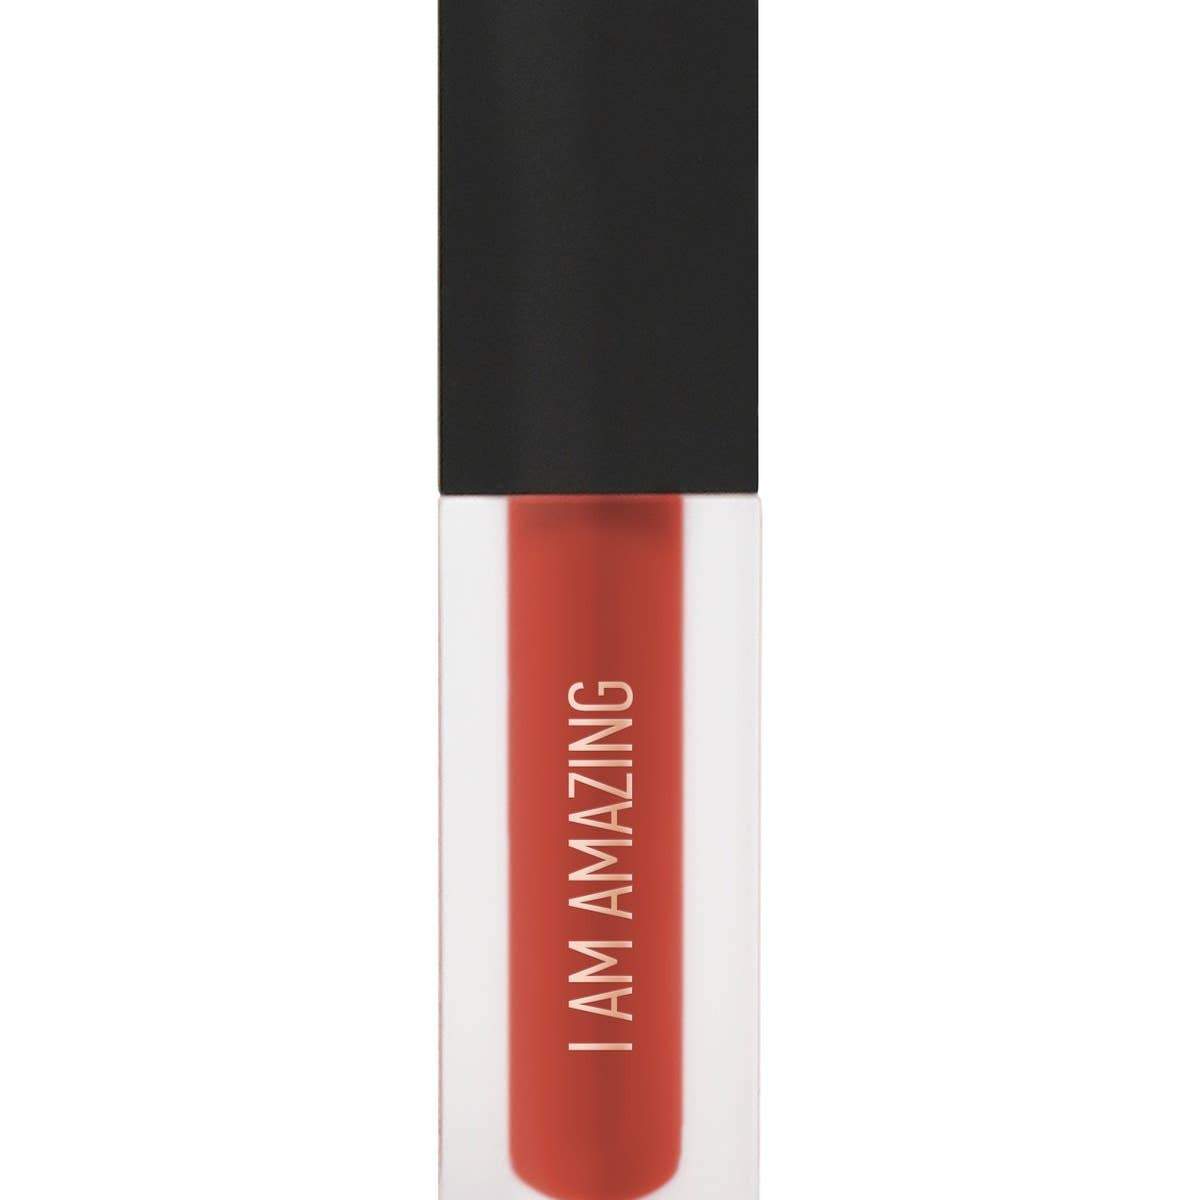 REALher lipstick I Am Amazing - Orange Red Matte Liquid Lipstick